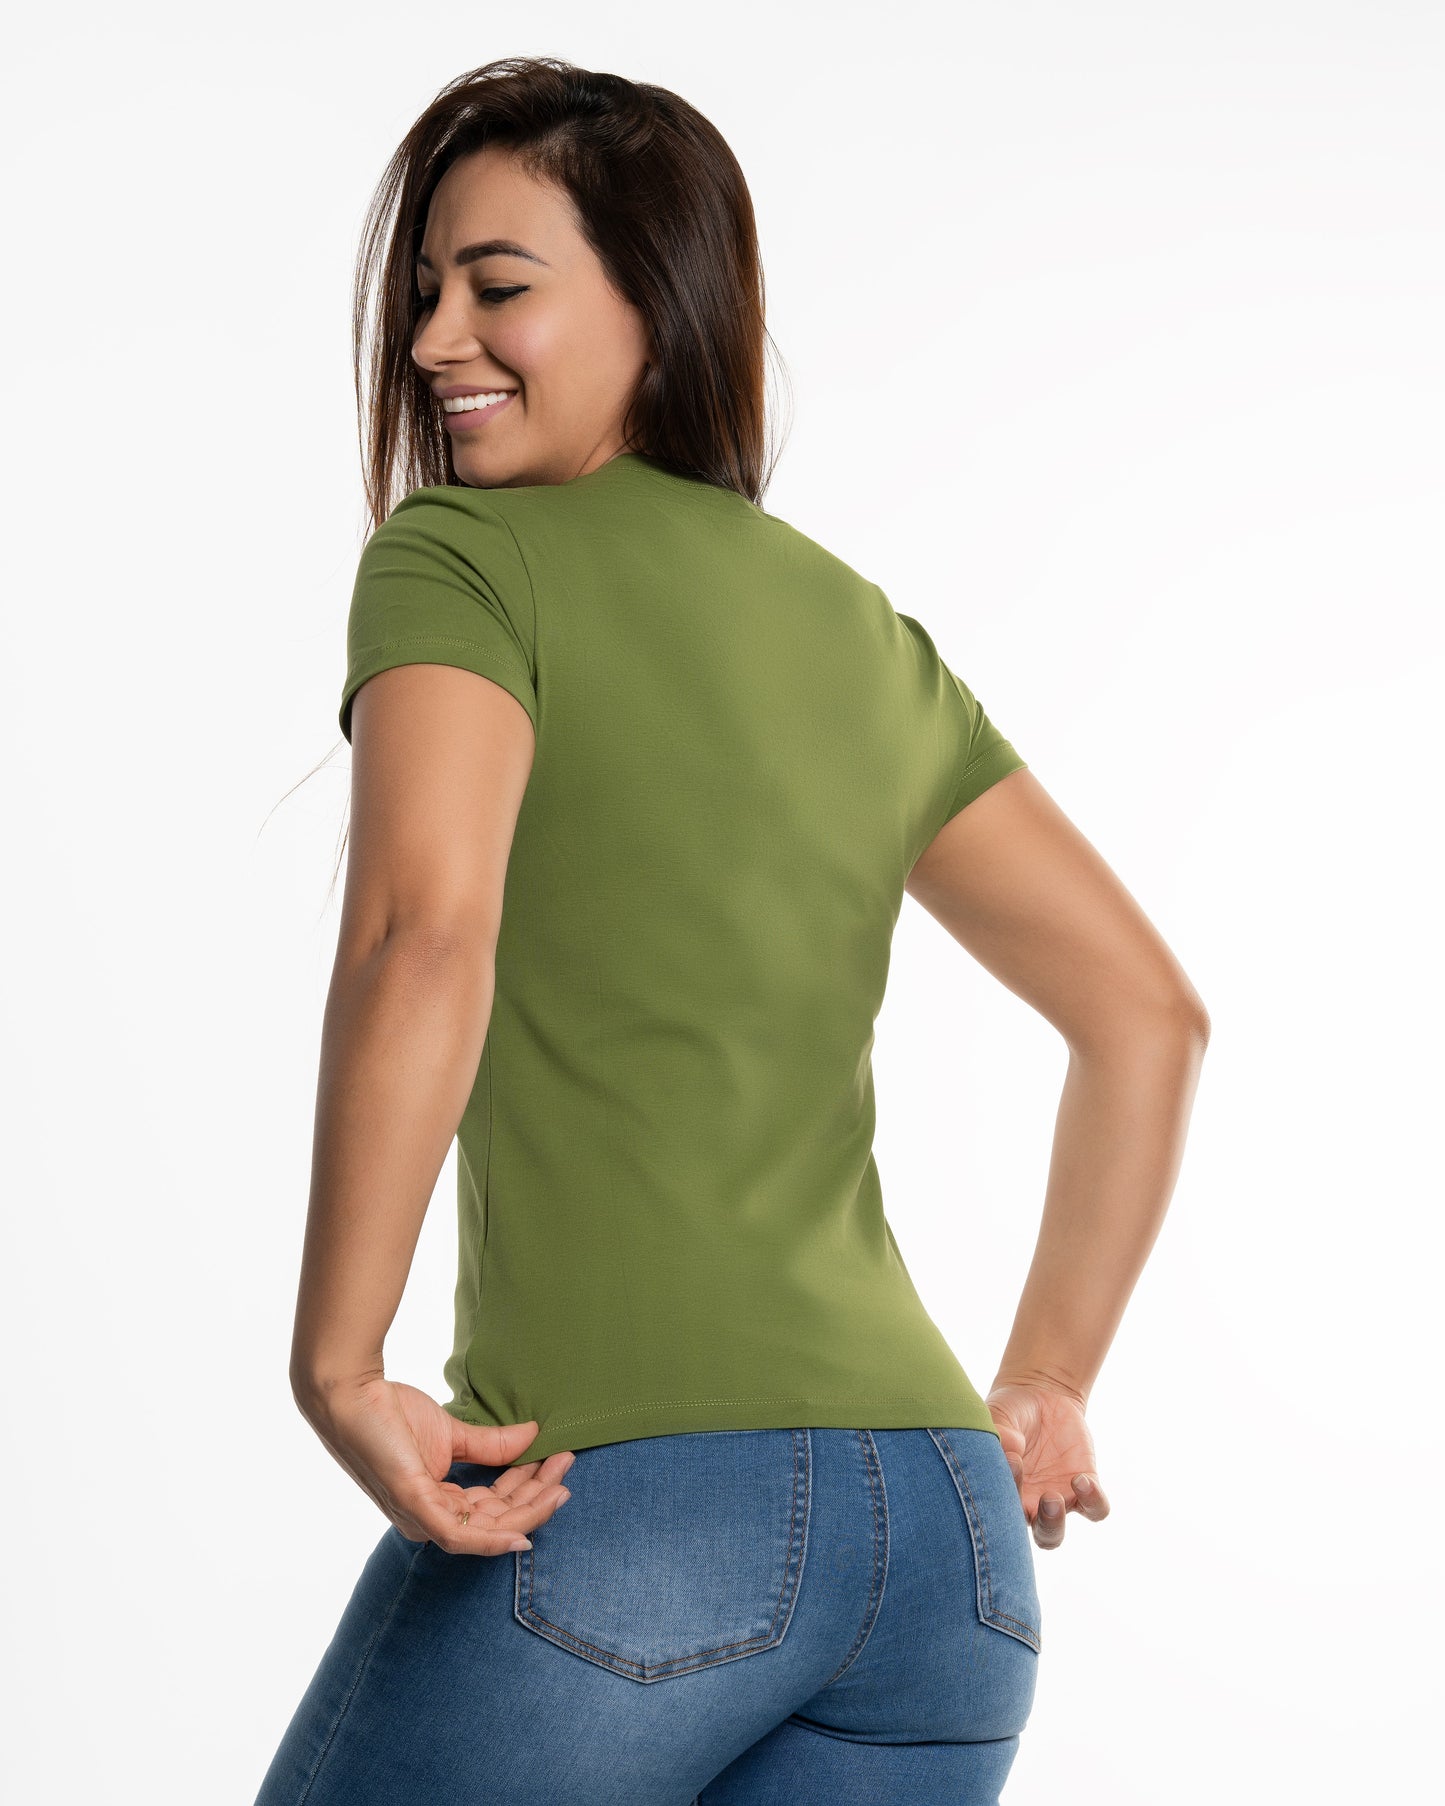 Short Sleeve T-Shirts for Women - Hunter Green